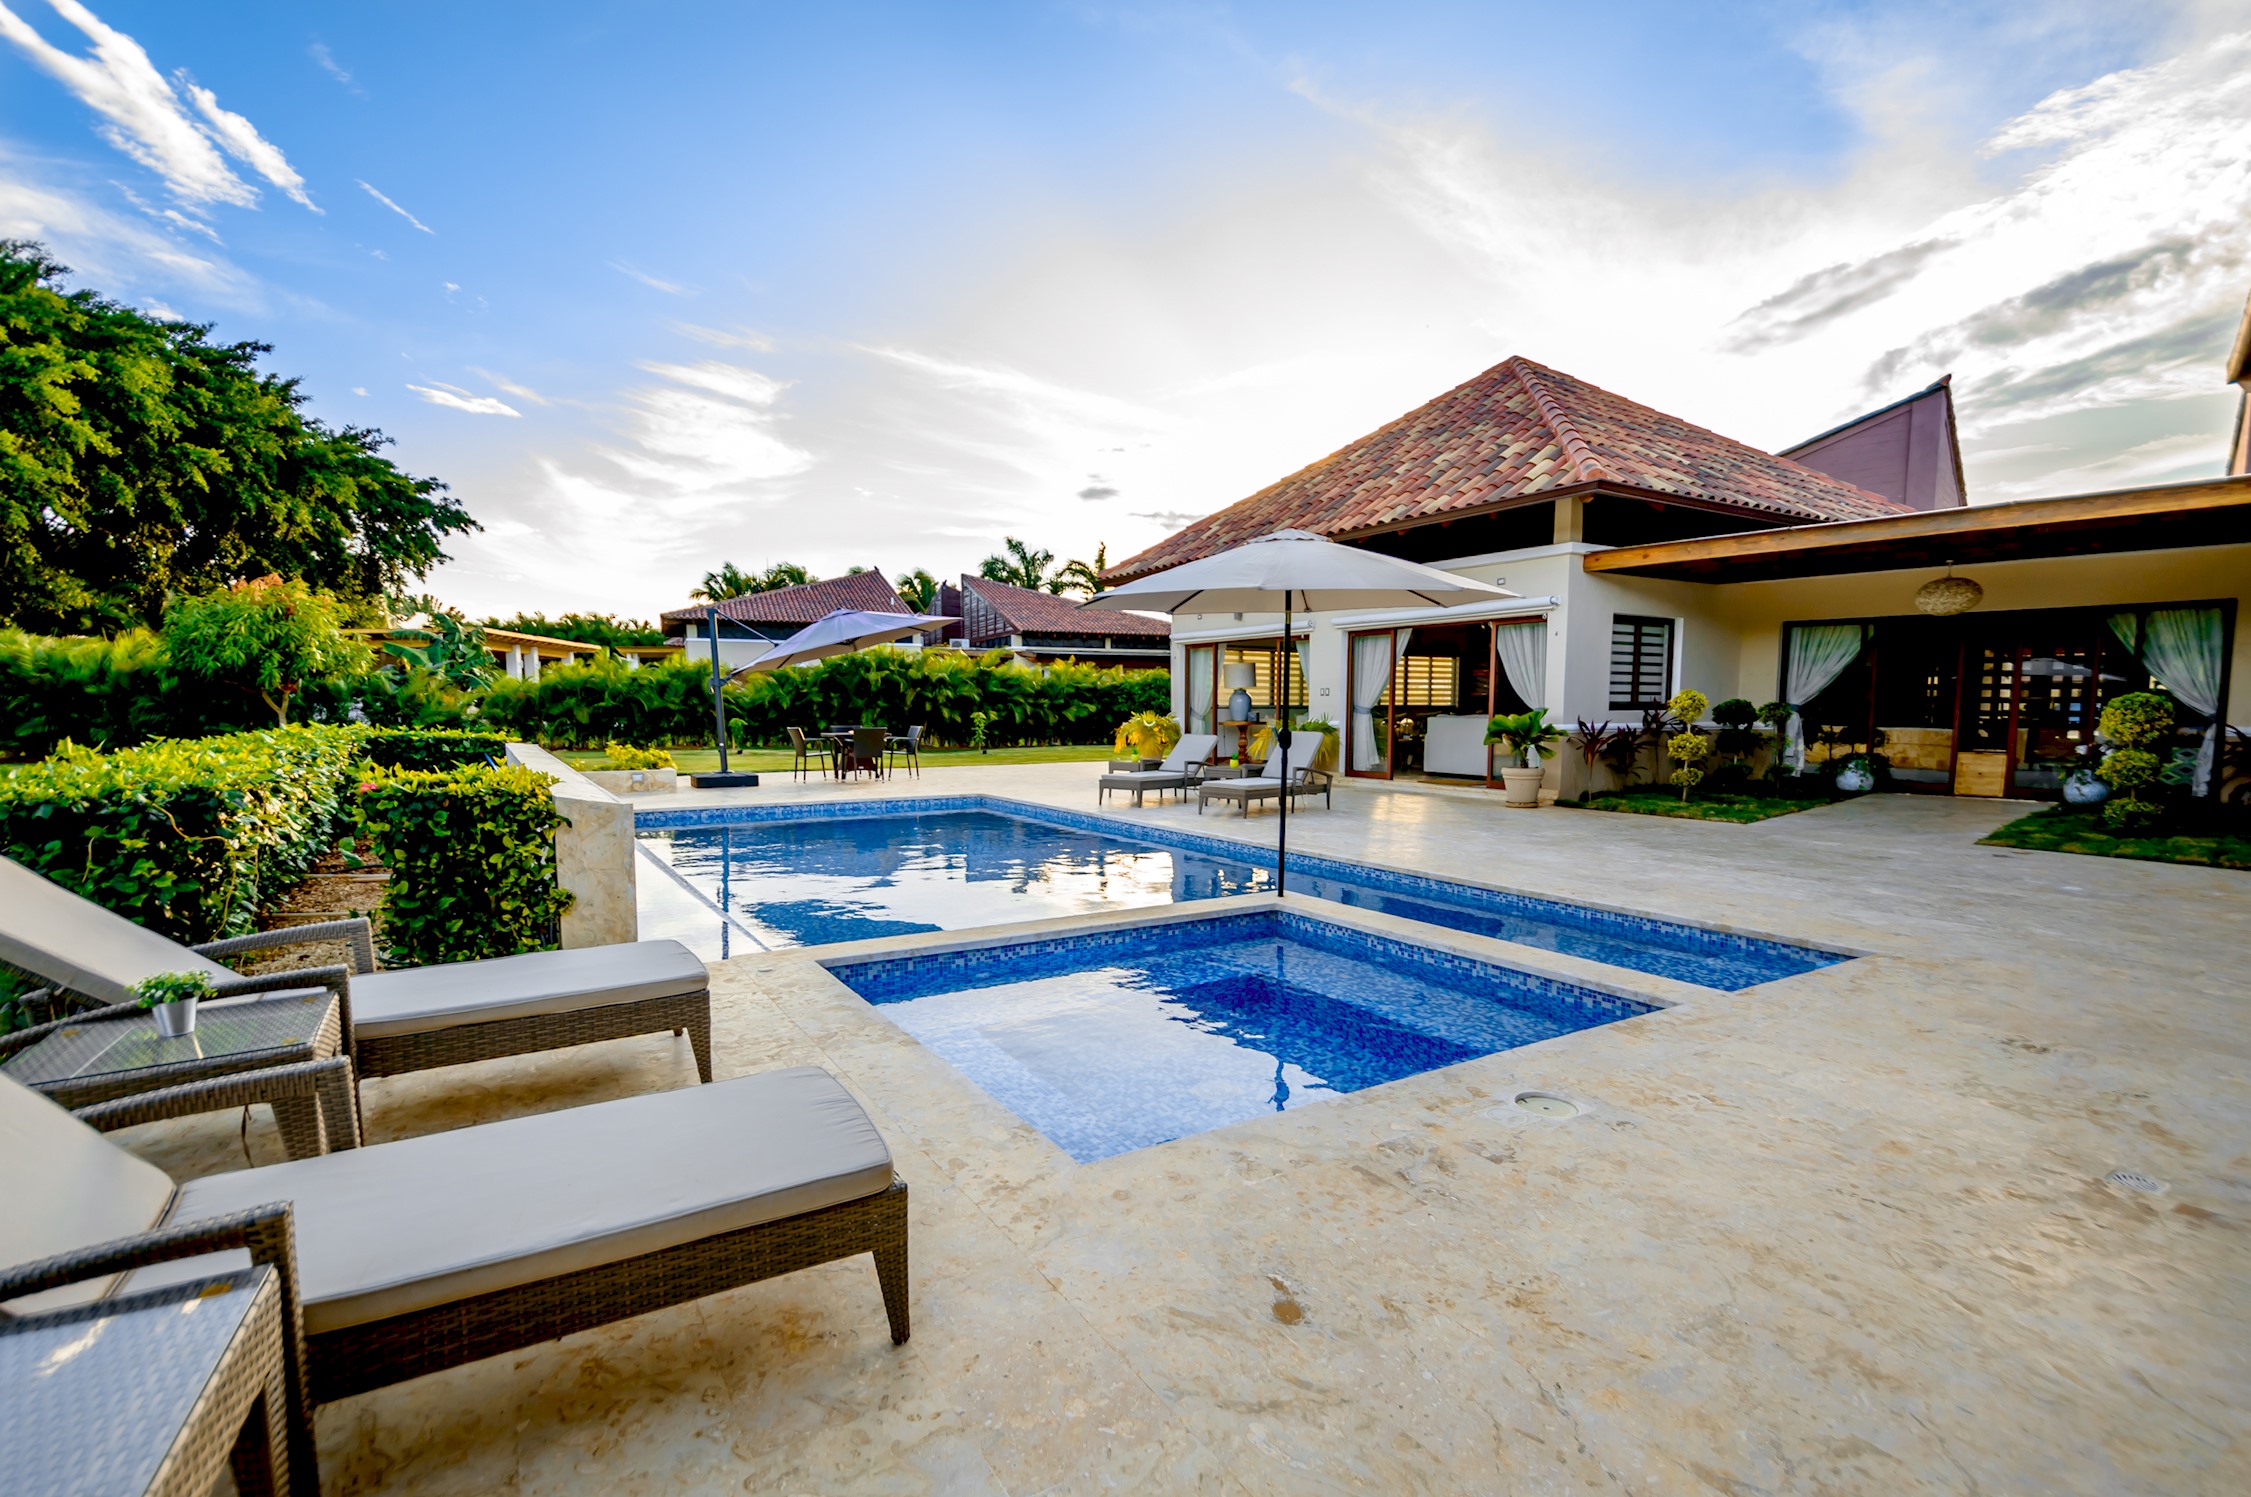 Luxurious 5-bdr villa at Casa de Campo – pool, jacuzzi, games, hibachi, staff 0